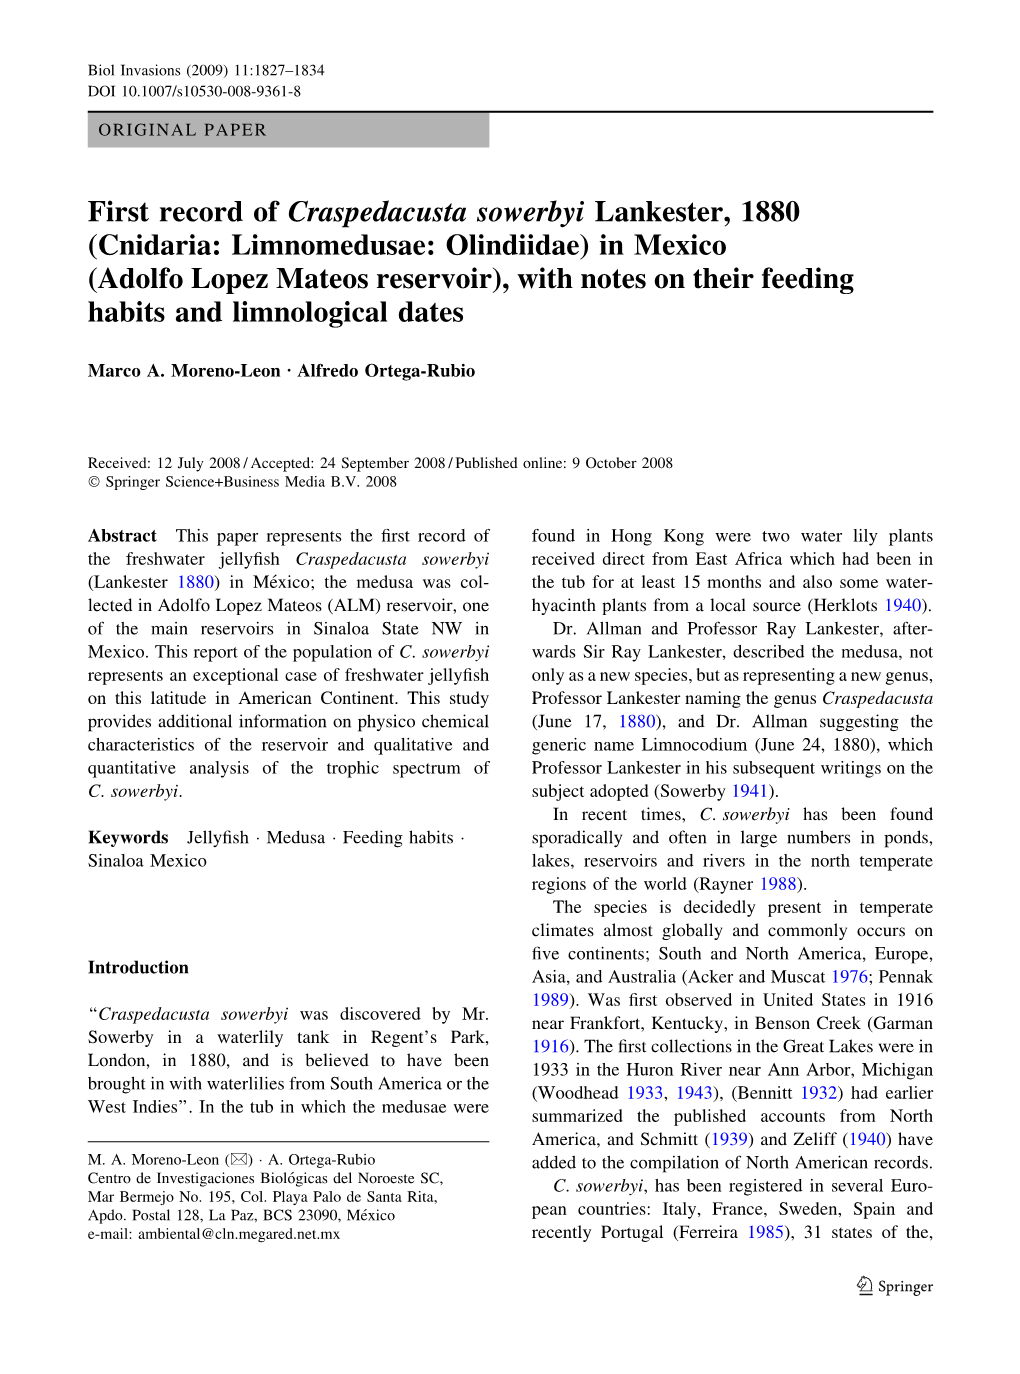 First Record of Craspedacusta Sowerbyi Lankester, 1880 (Cnidaria